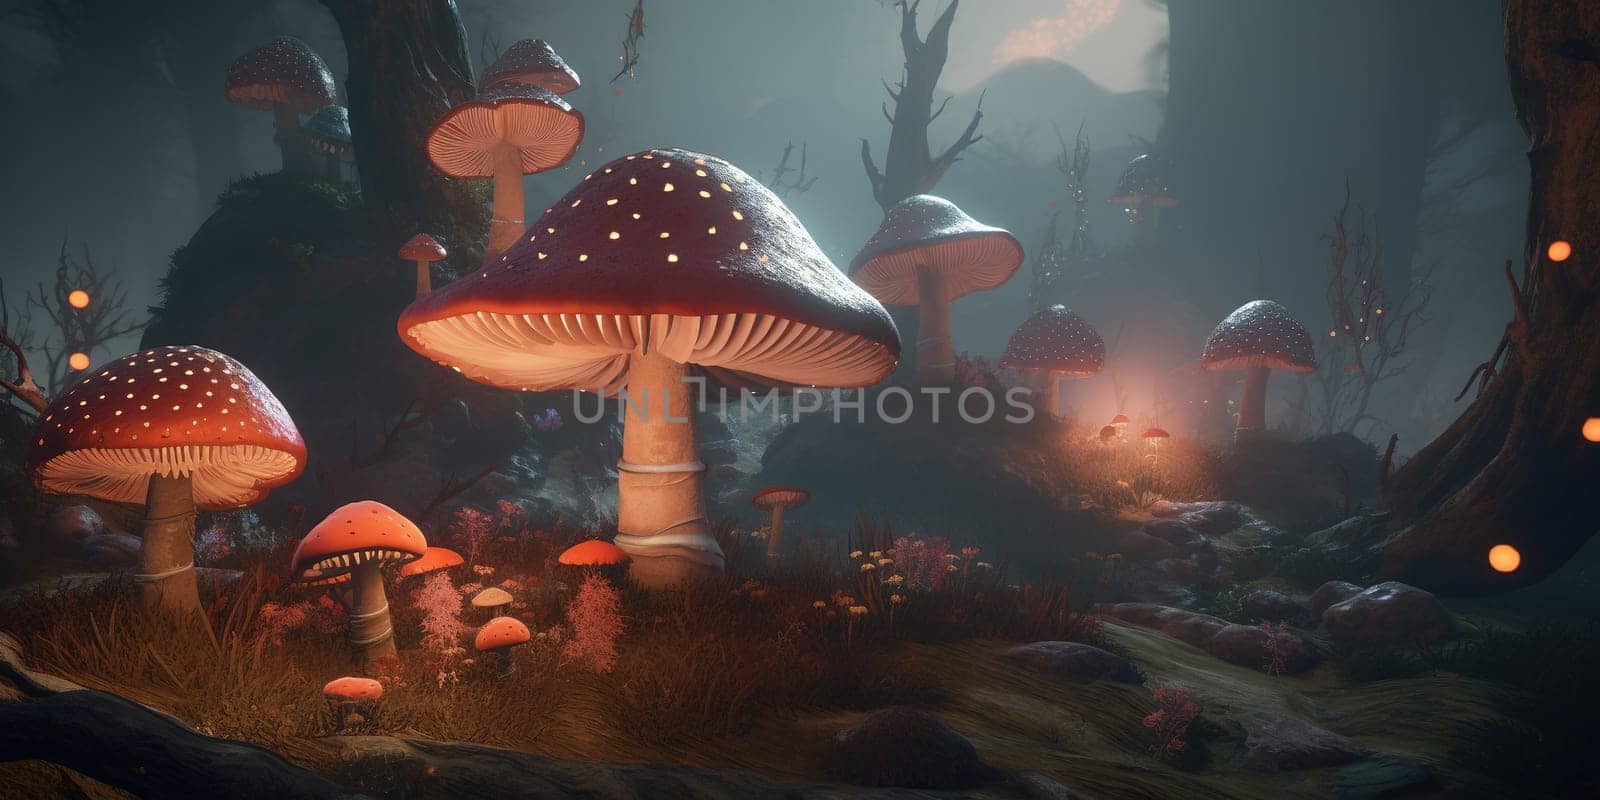 Illustration Fabulous Magic Mushrooms Lighting At Night by GekaSkr